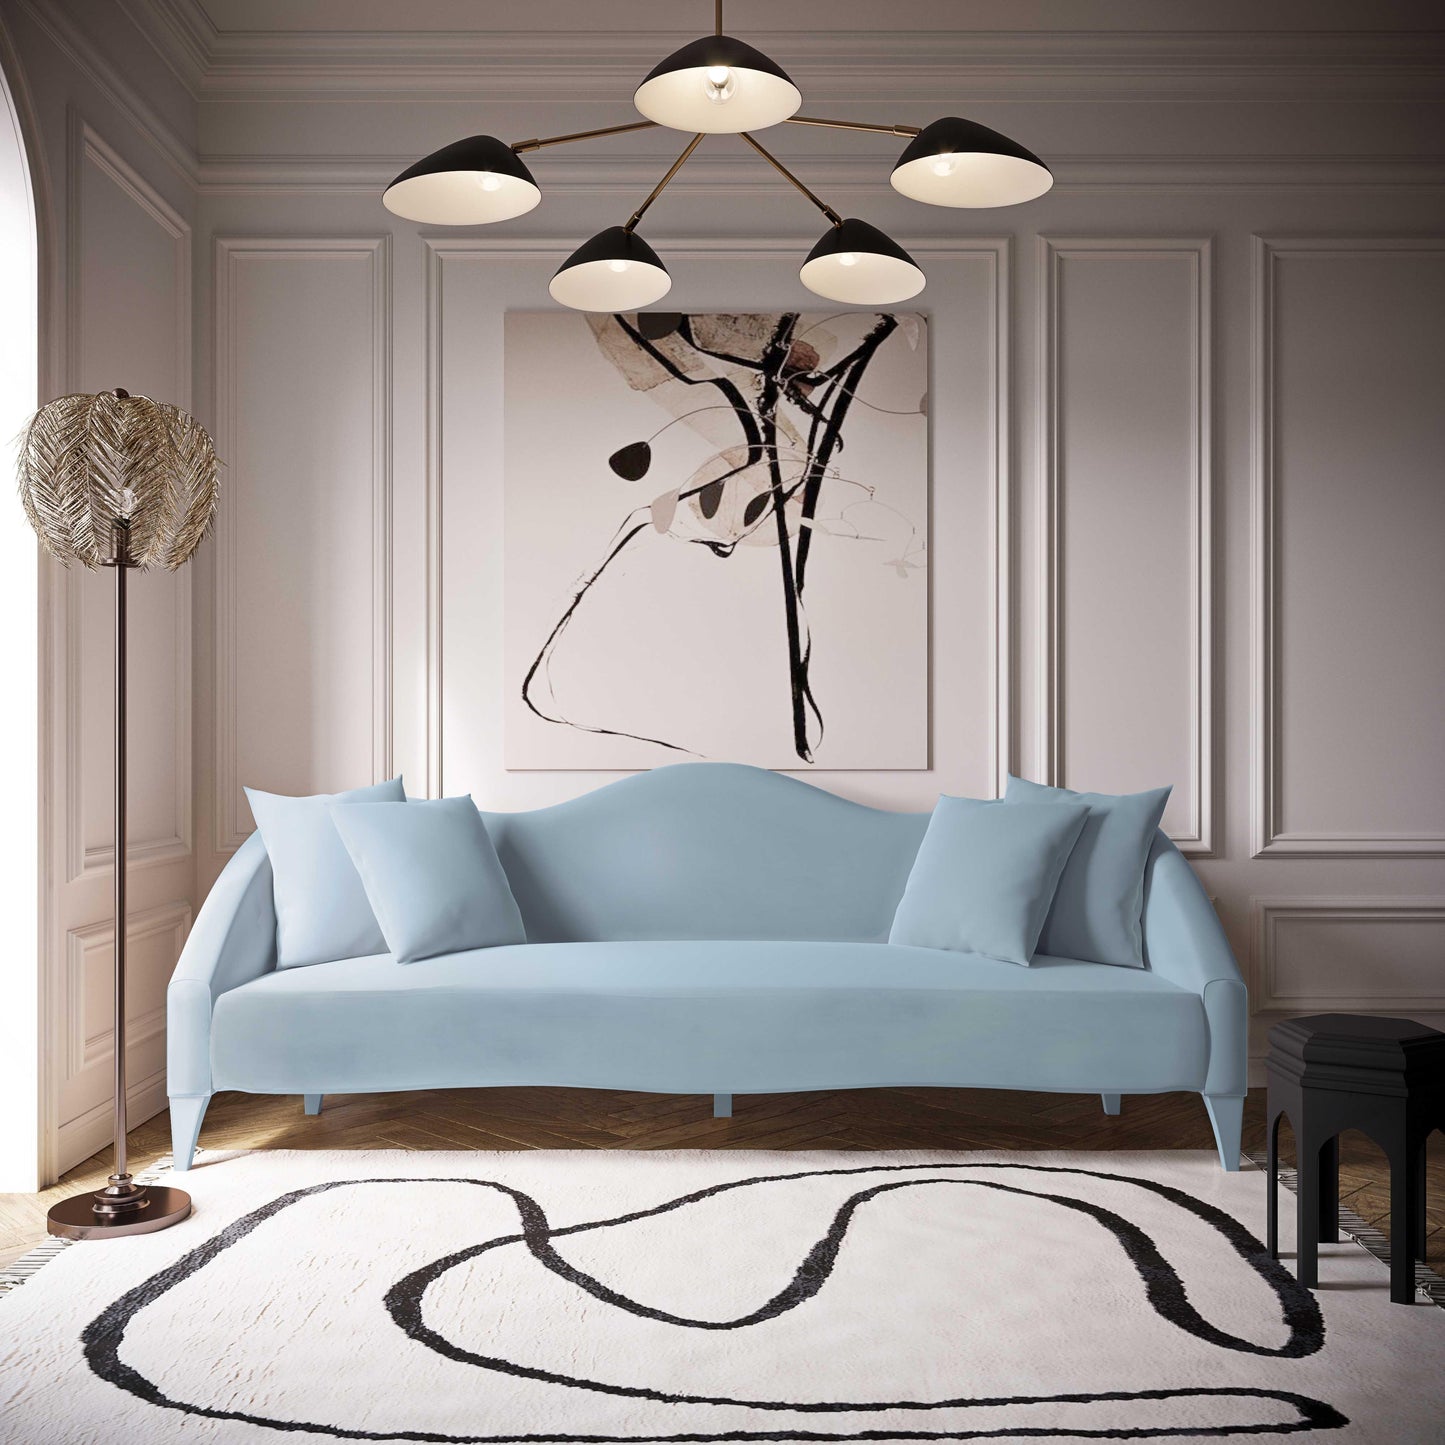 Tov Furniture Naya Sea Blue Velvet Sofa